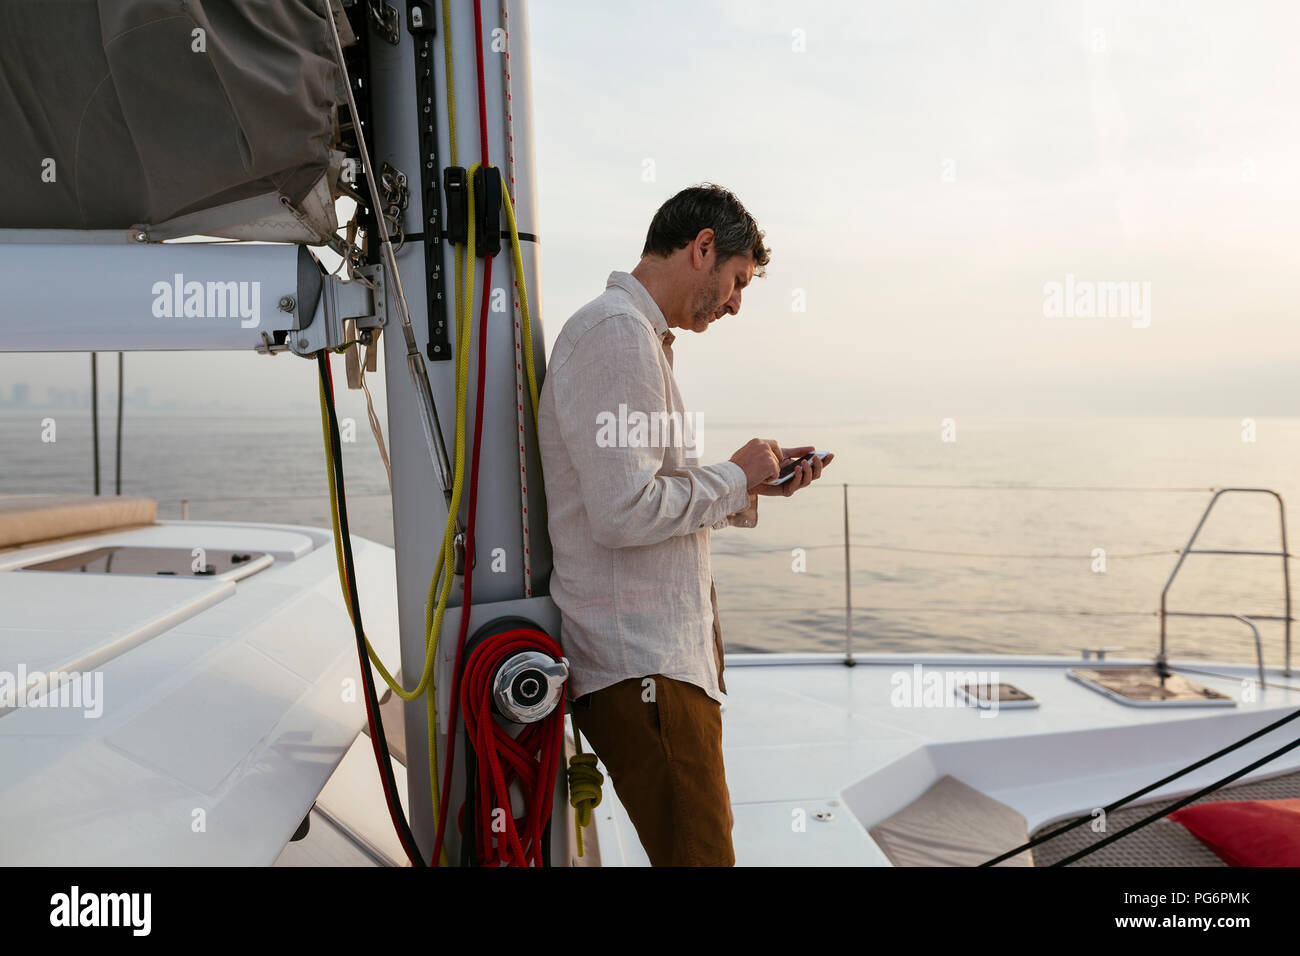 Homme Marure sur catamaran, using smartphone Banque D'Images